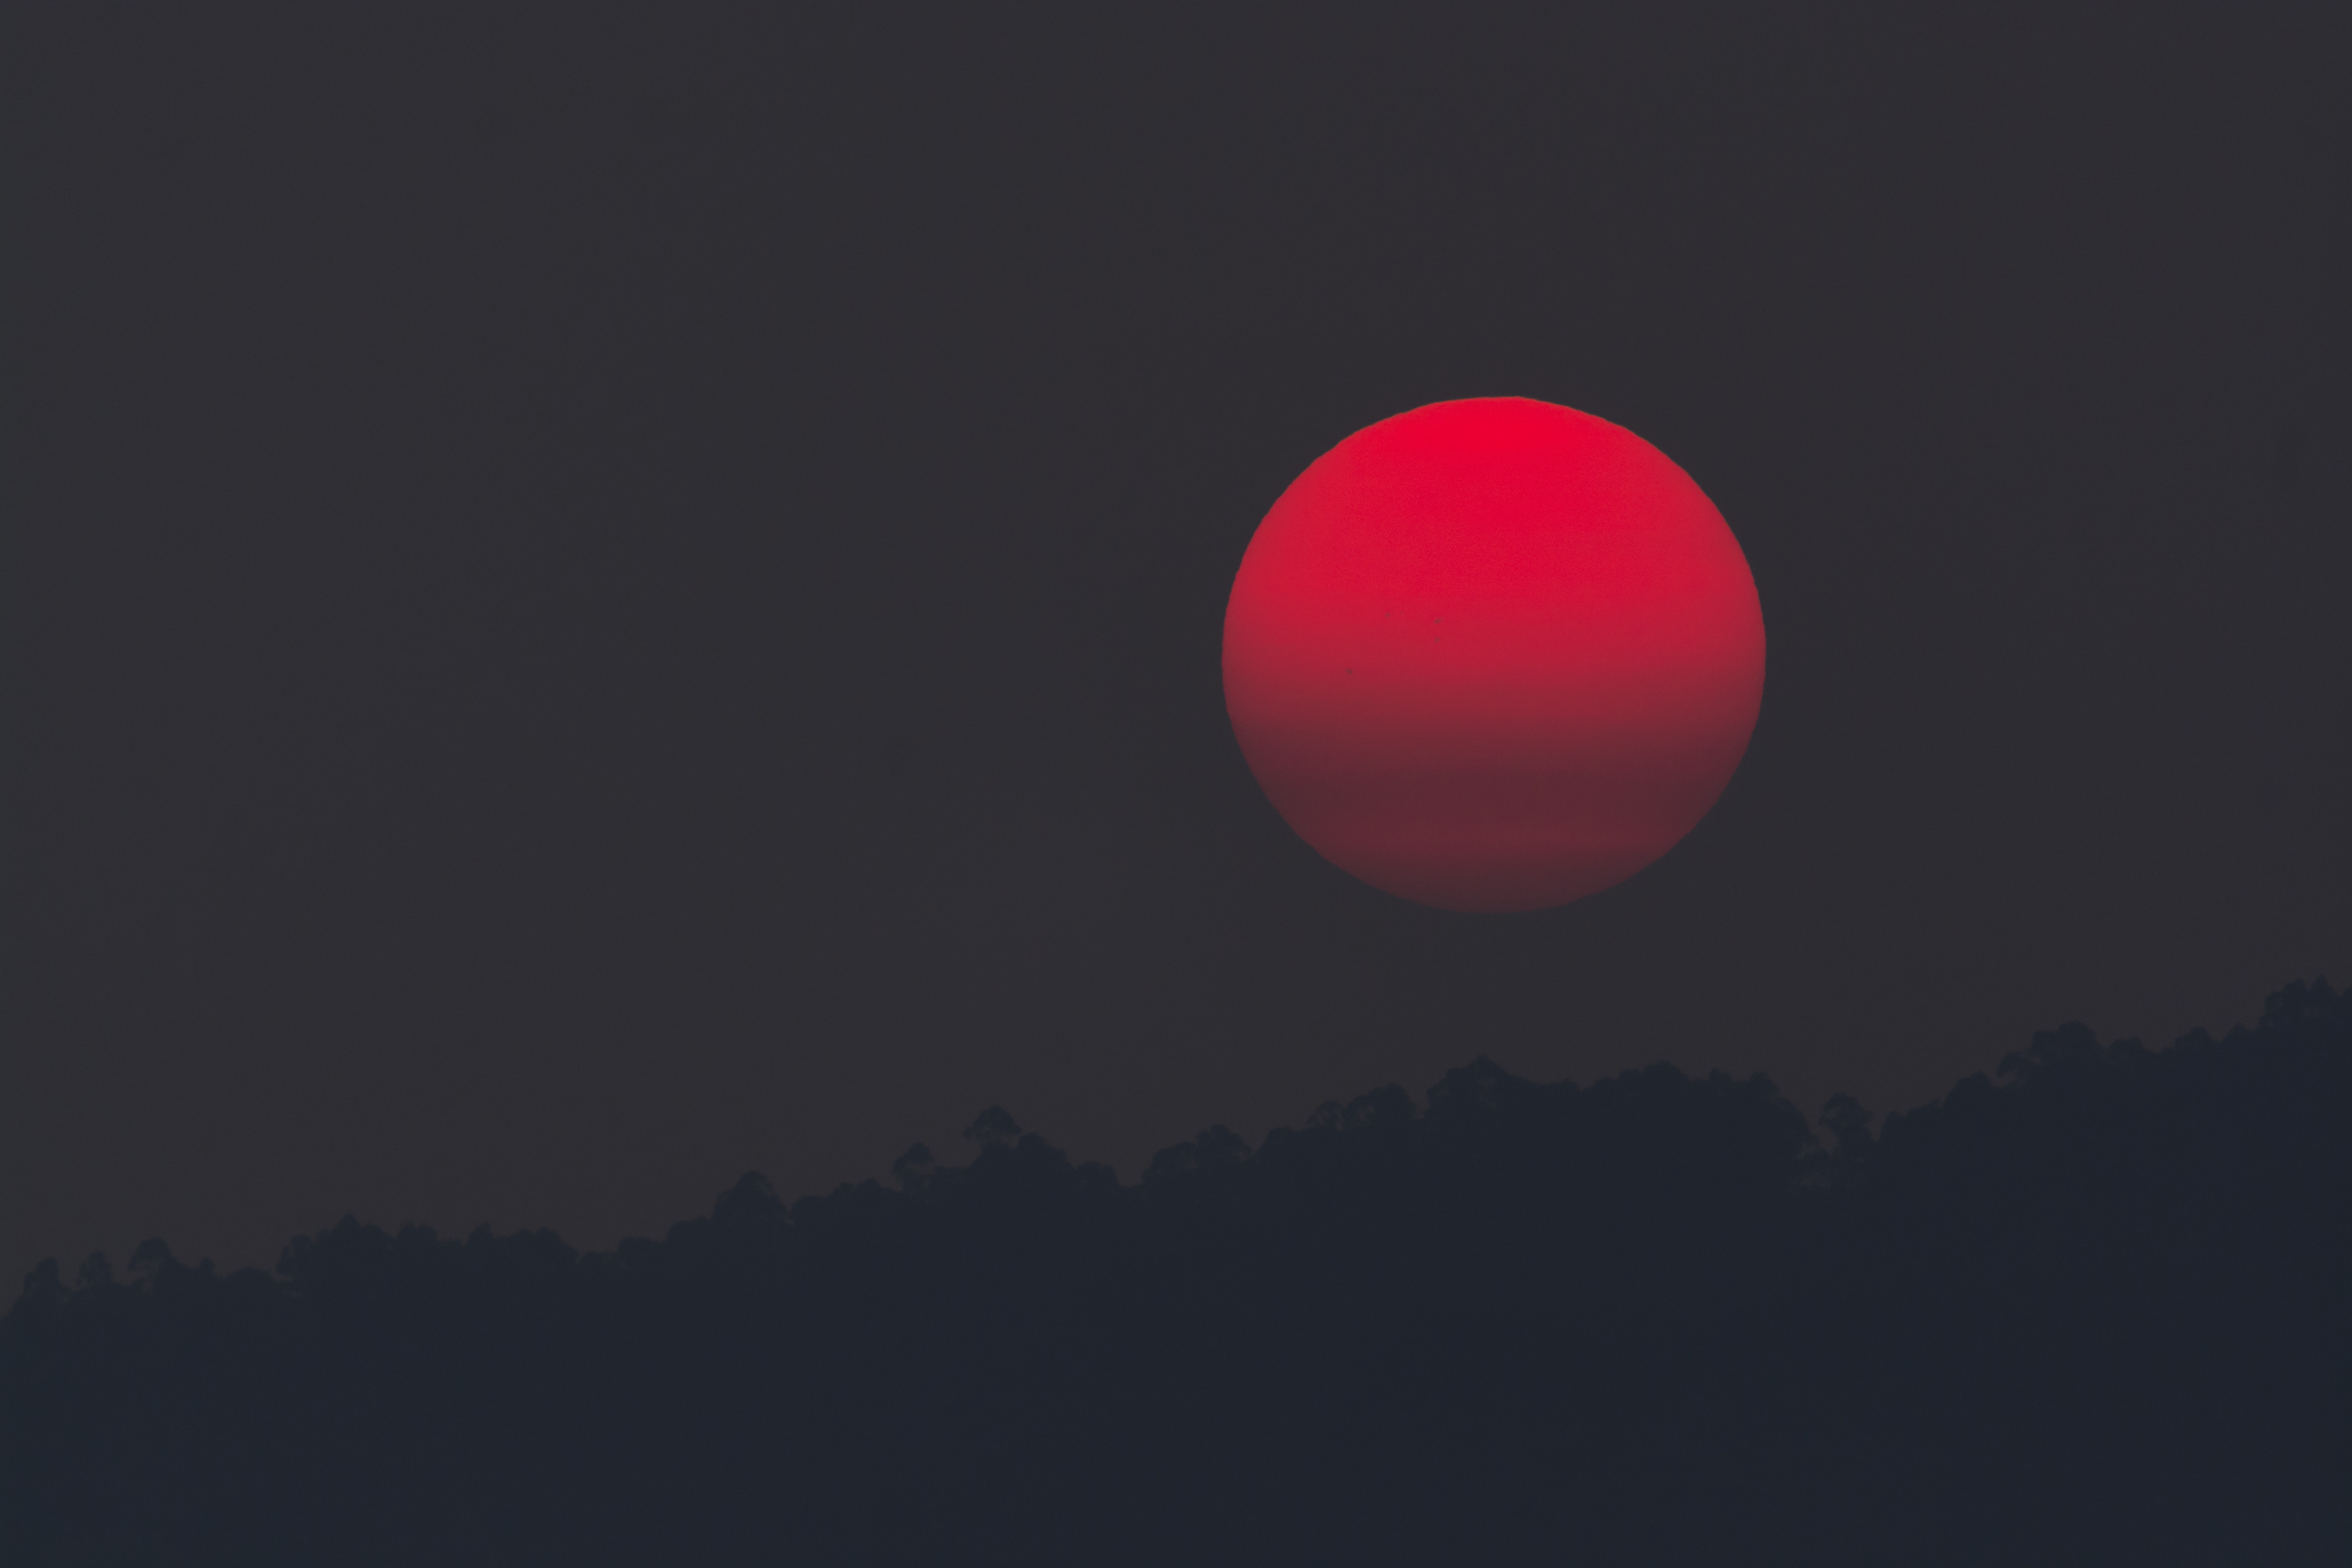 Янтарный закат Саванны · бесплатное фото